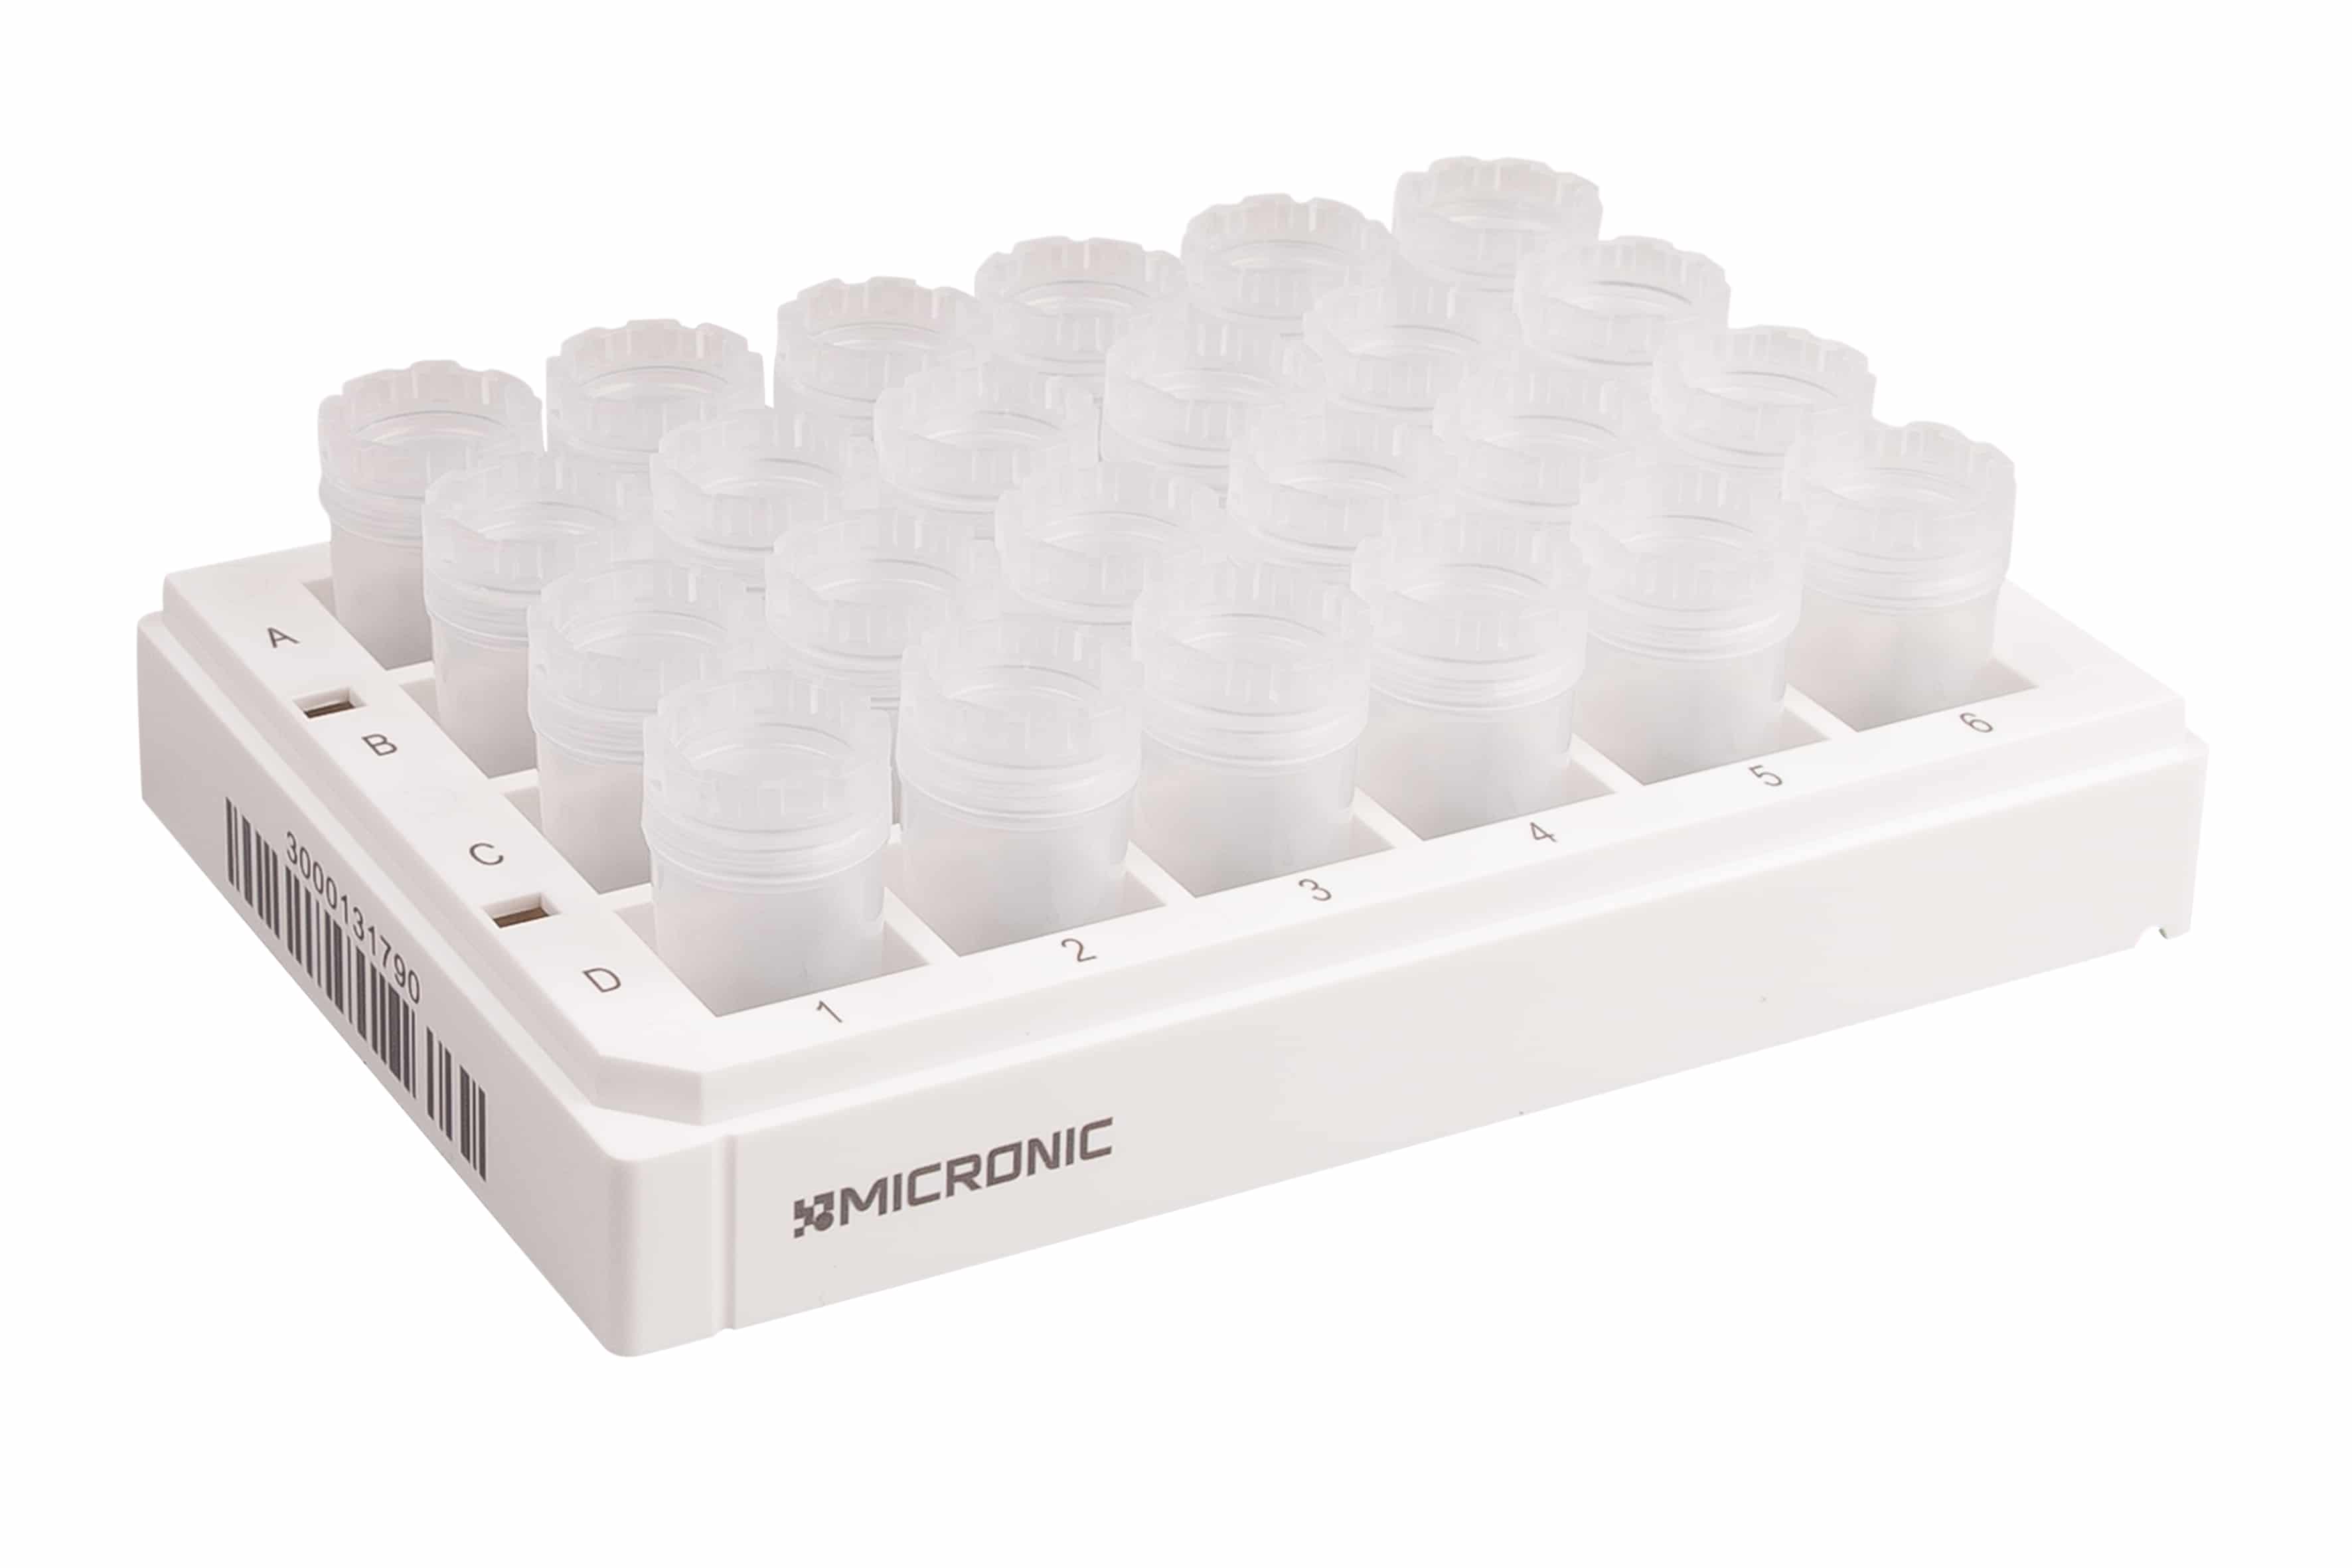 Micronic 24-2 Rack for 3.50ml Sample Tubes - Micronic